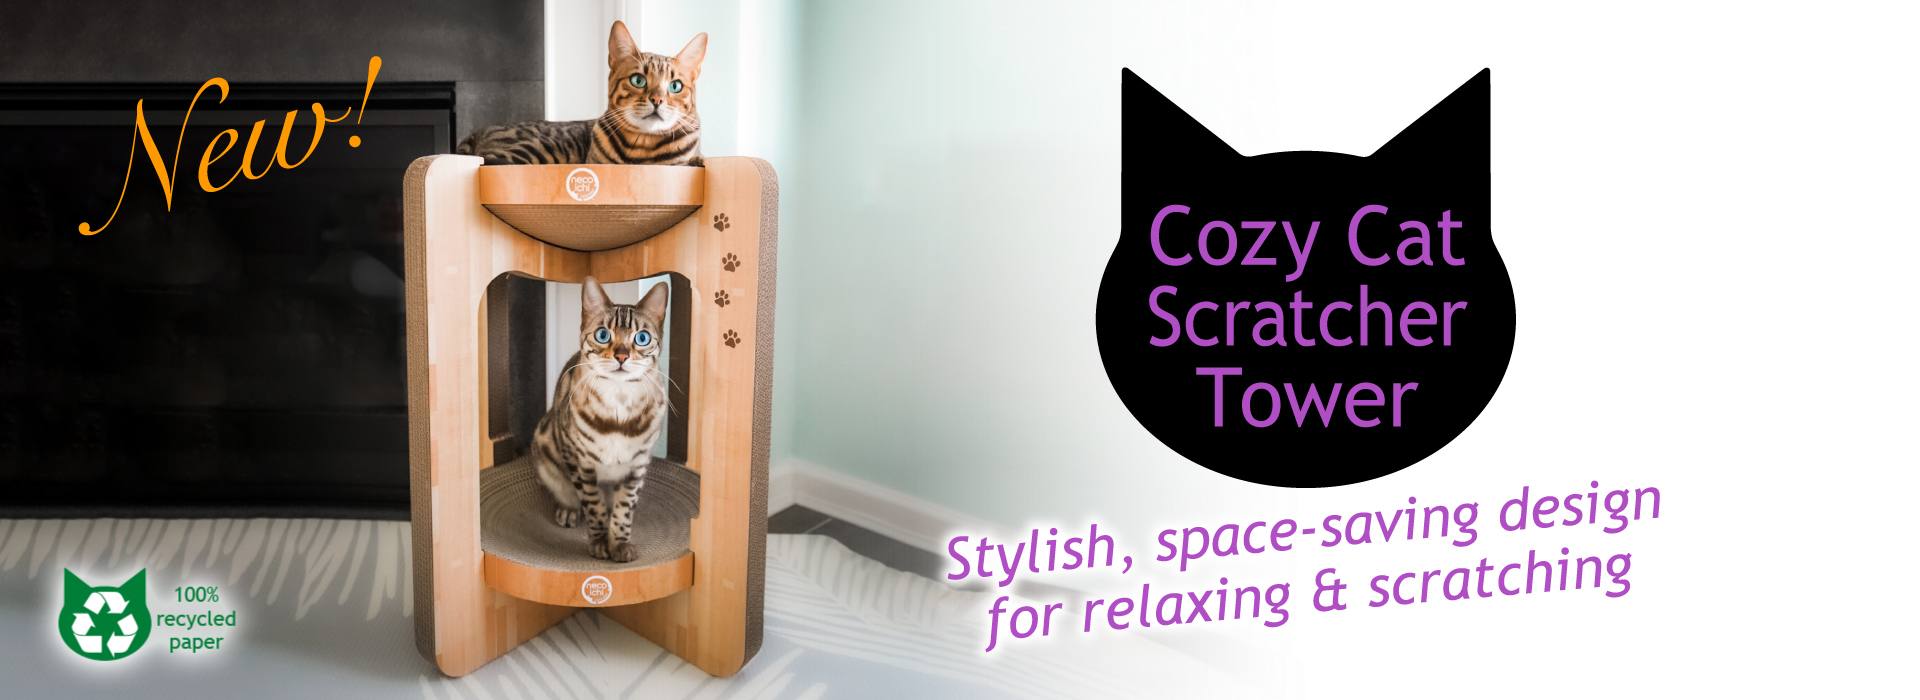 Cozy Cat Scratcher Tower